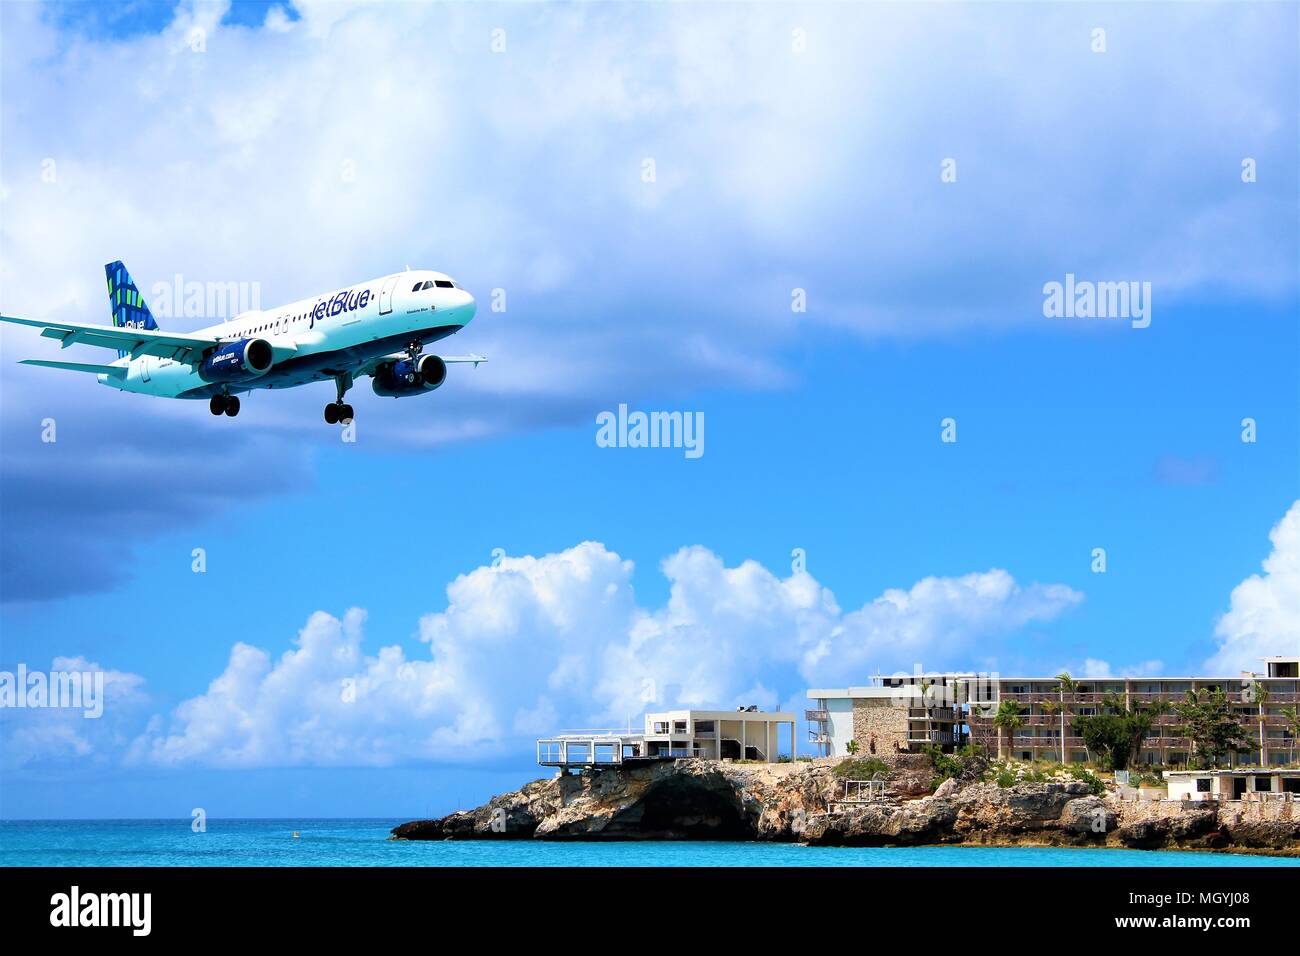 MAHO, ST MAARTEN - FEBRUARY 2018: A shot from Maho beach of a jetBlue passenger plane coming in to land at SXM Princess Juliana International Airport. Stock Photo